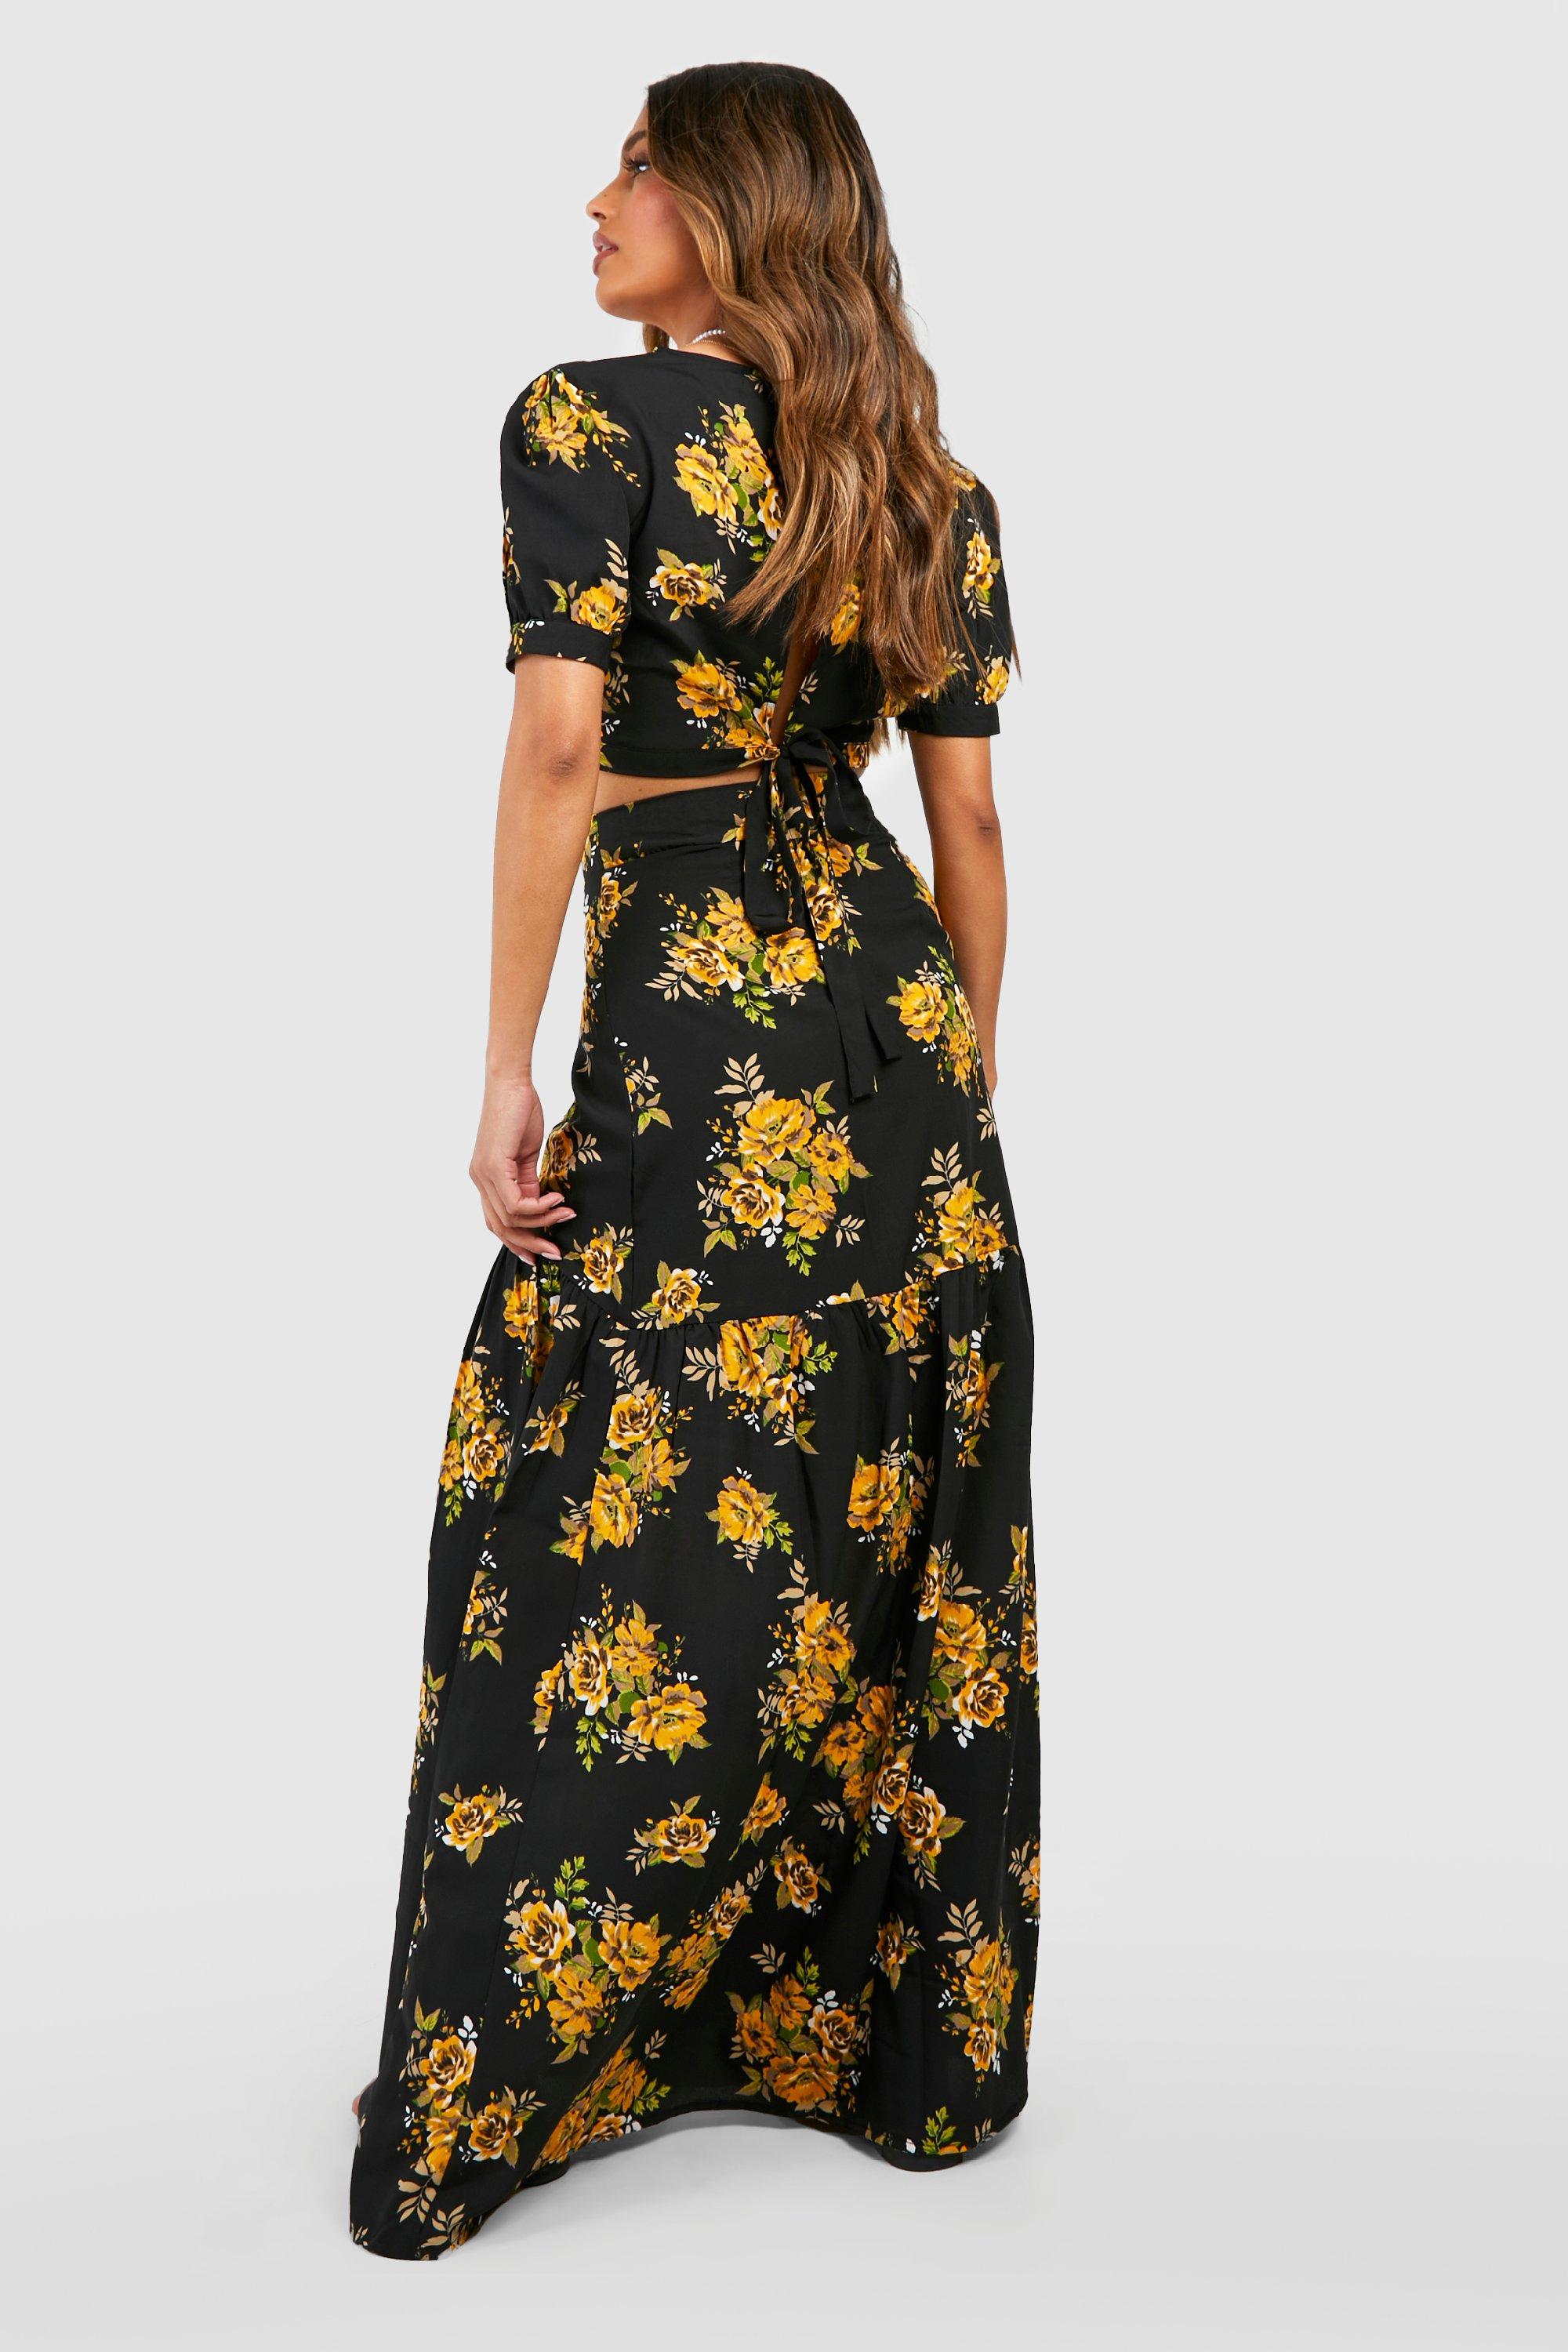 jupe longue fleurie jaune